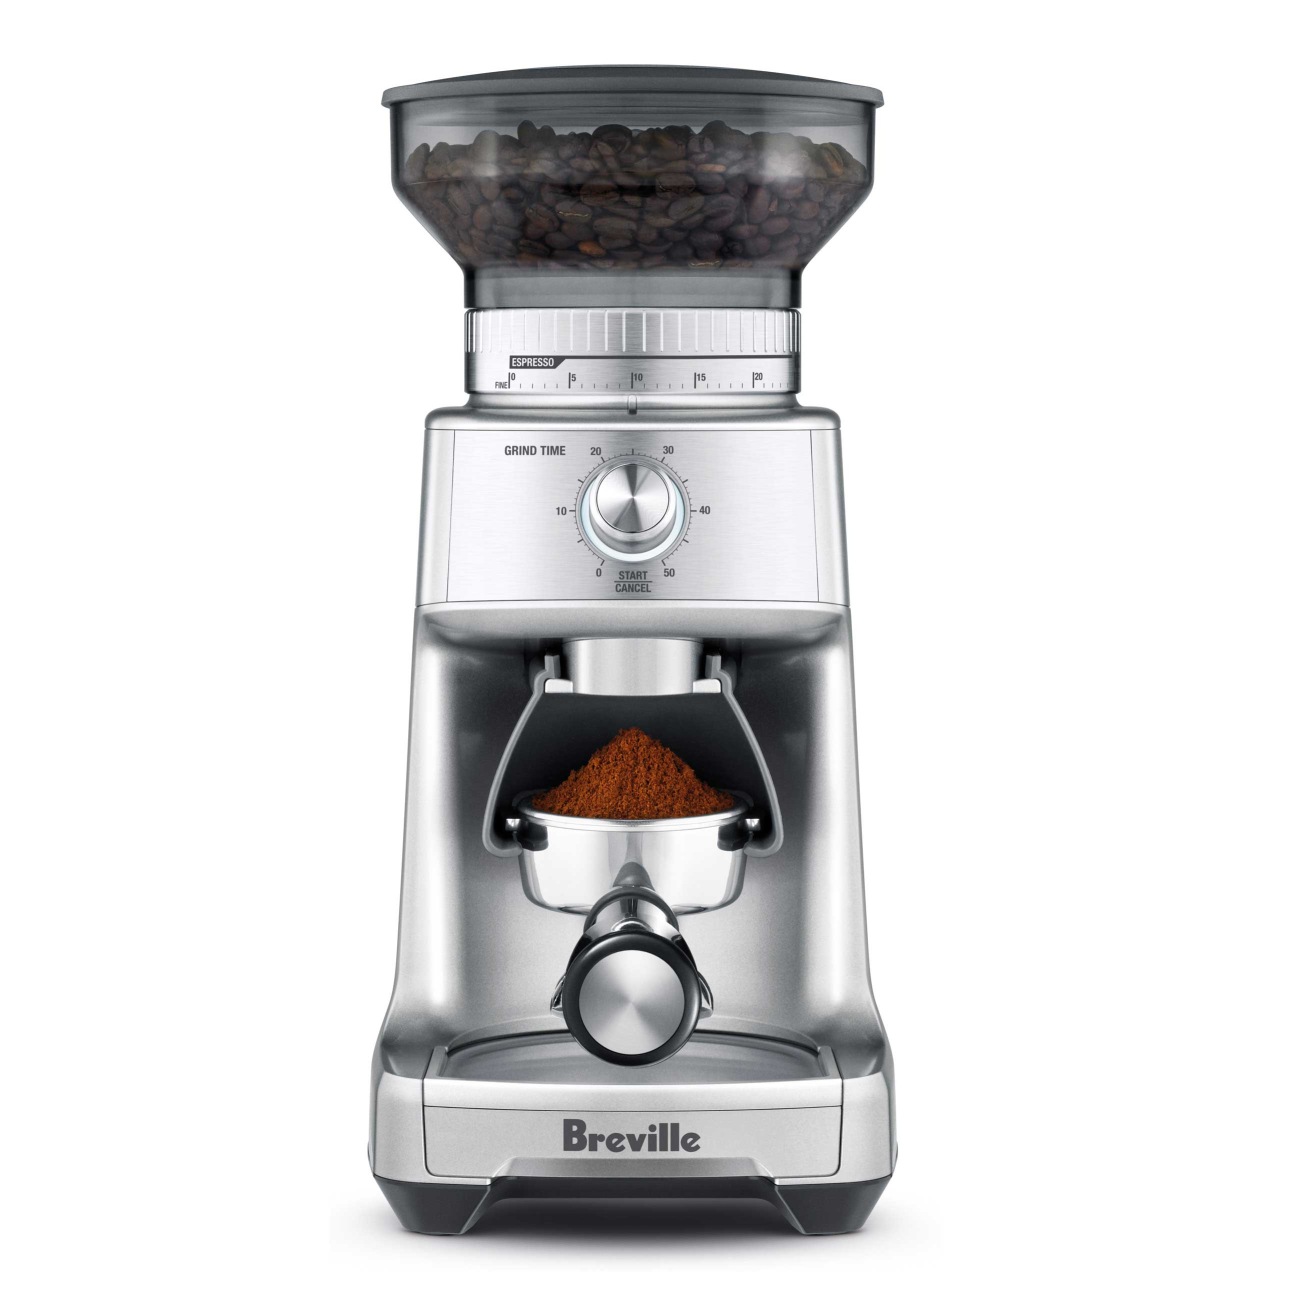 breville grind control coffee maker leaking